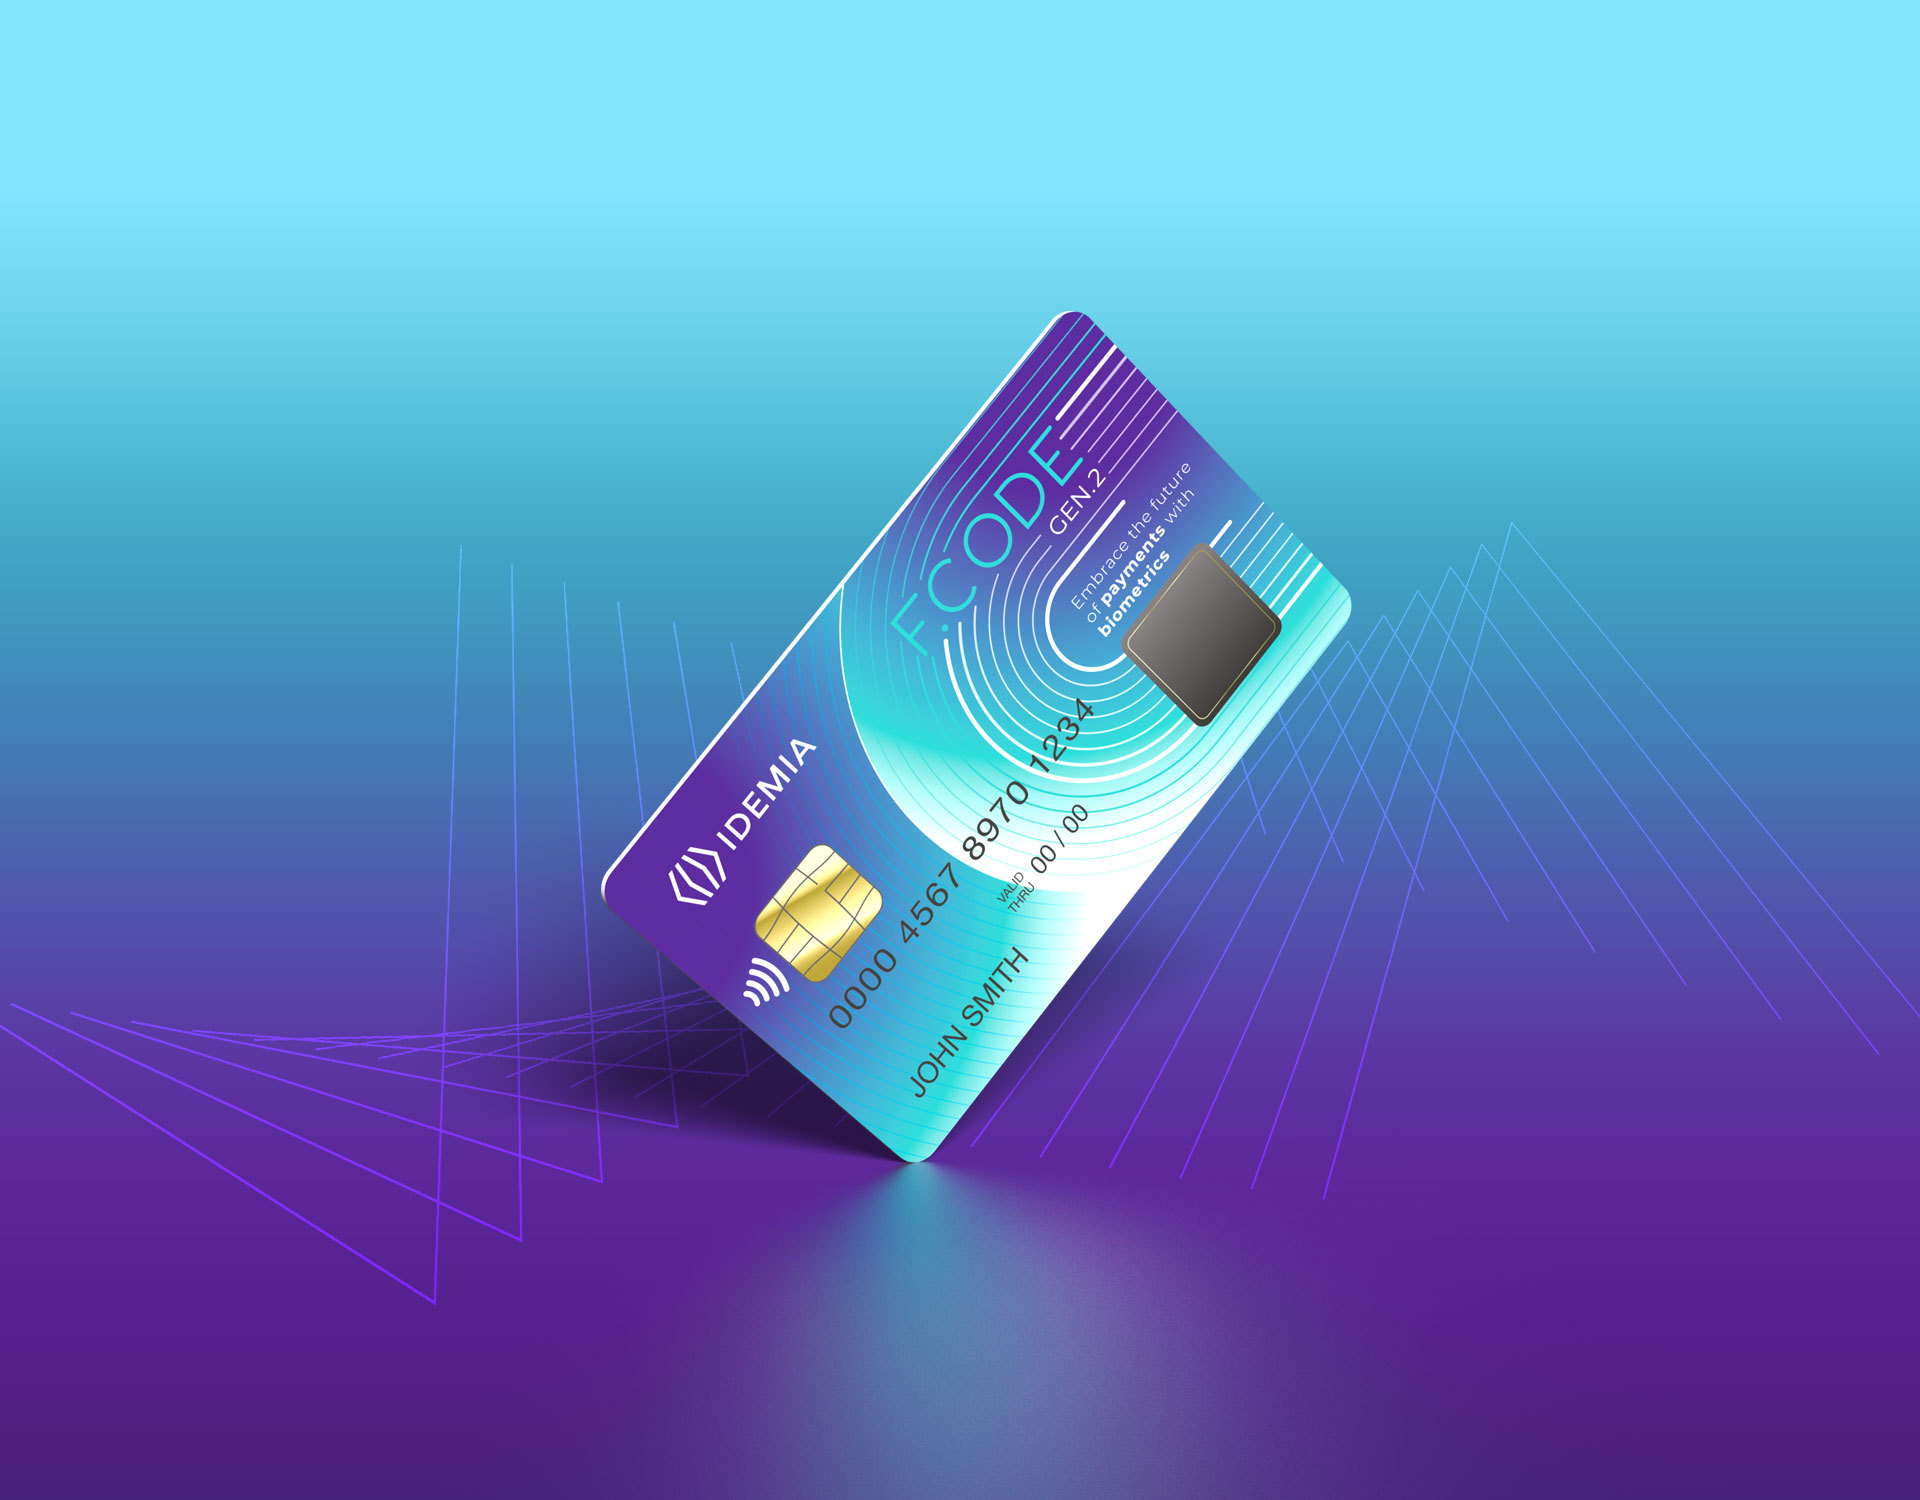 IDEX Biometrics Receives Initial Order From Smart Card Maker